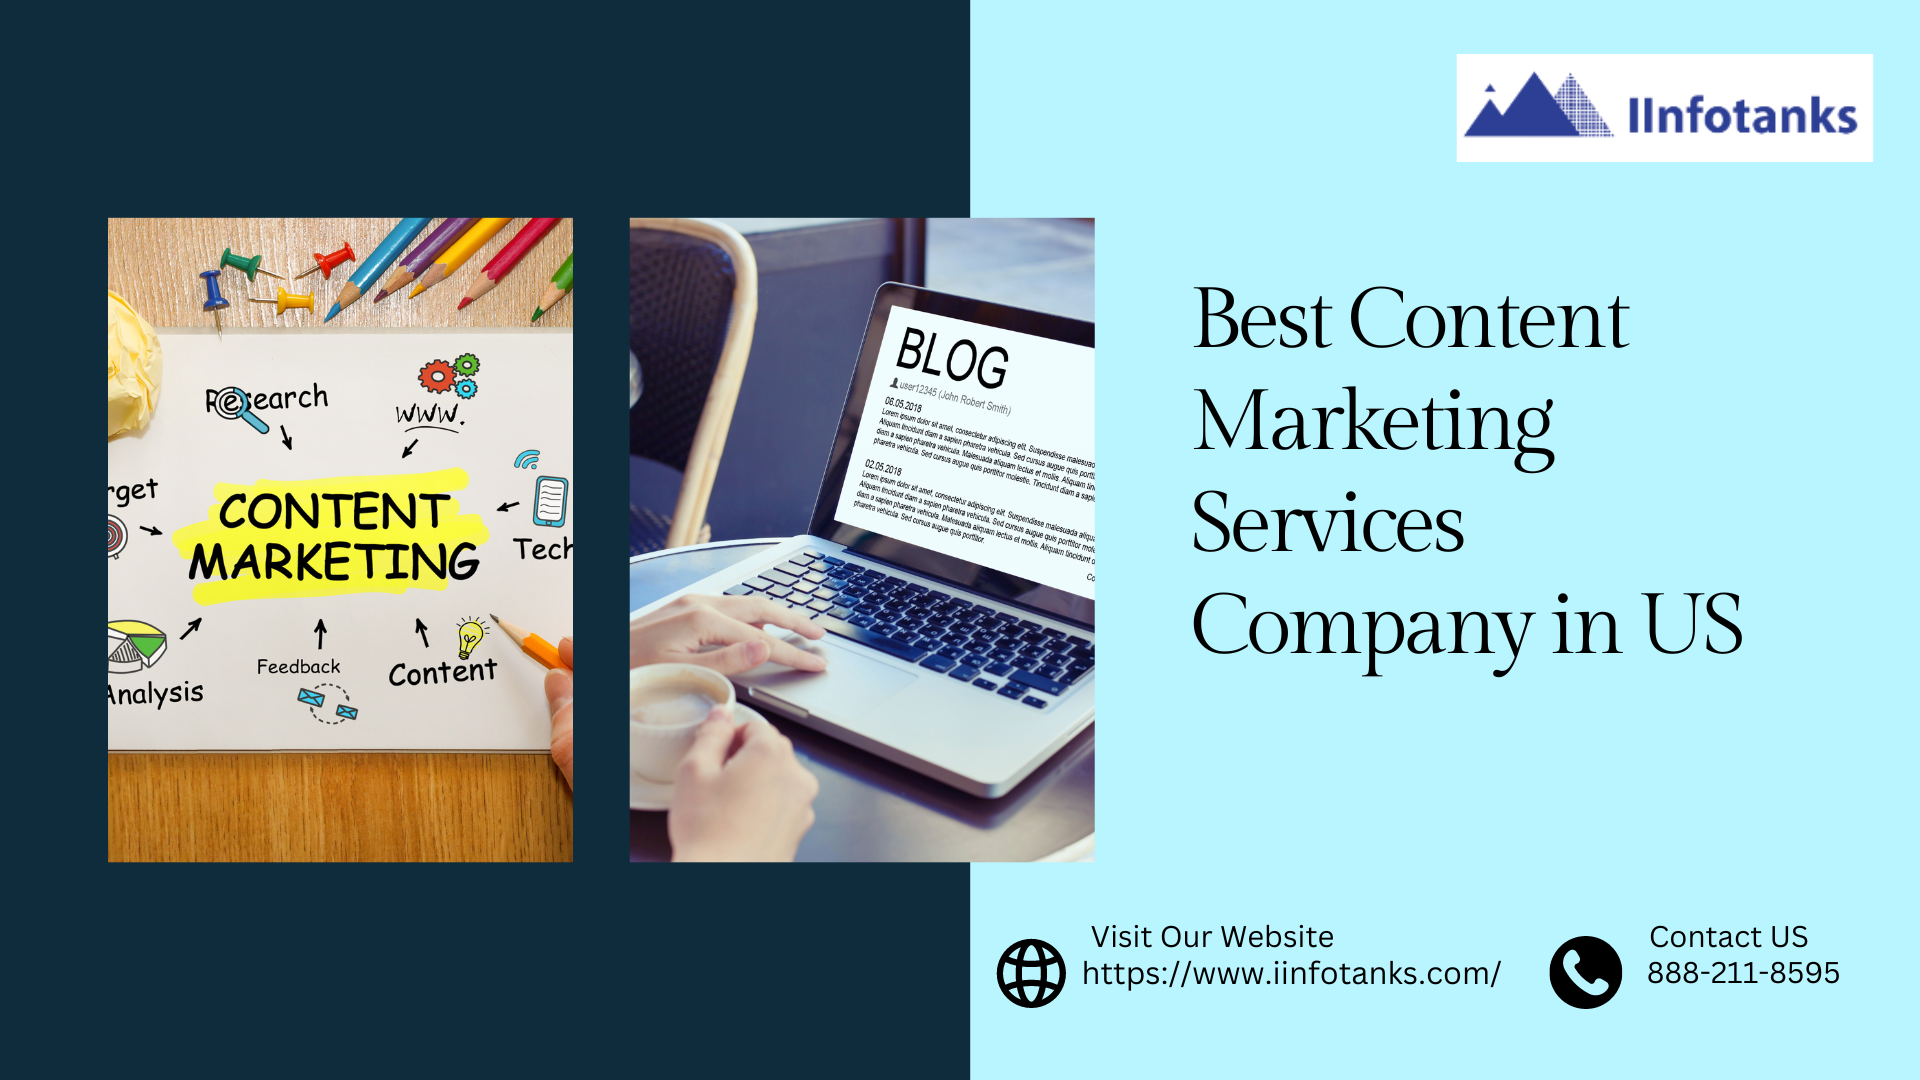 Best Content Marketing Services Company in US - IInfotanks